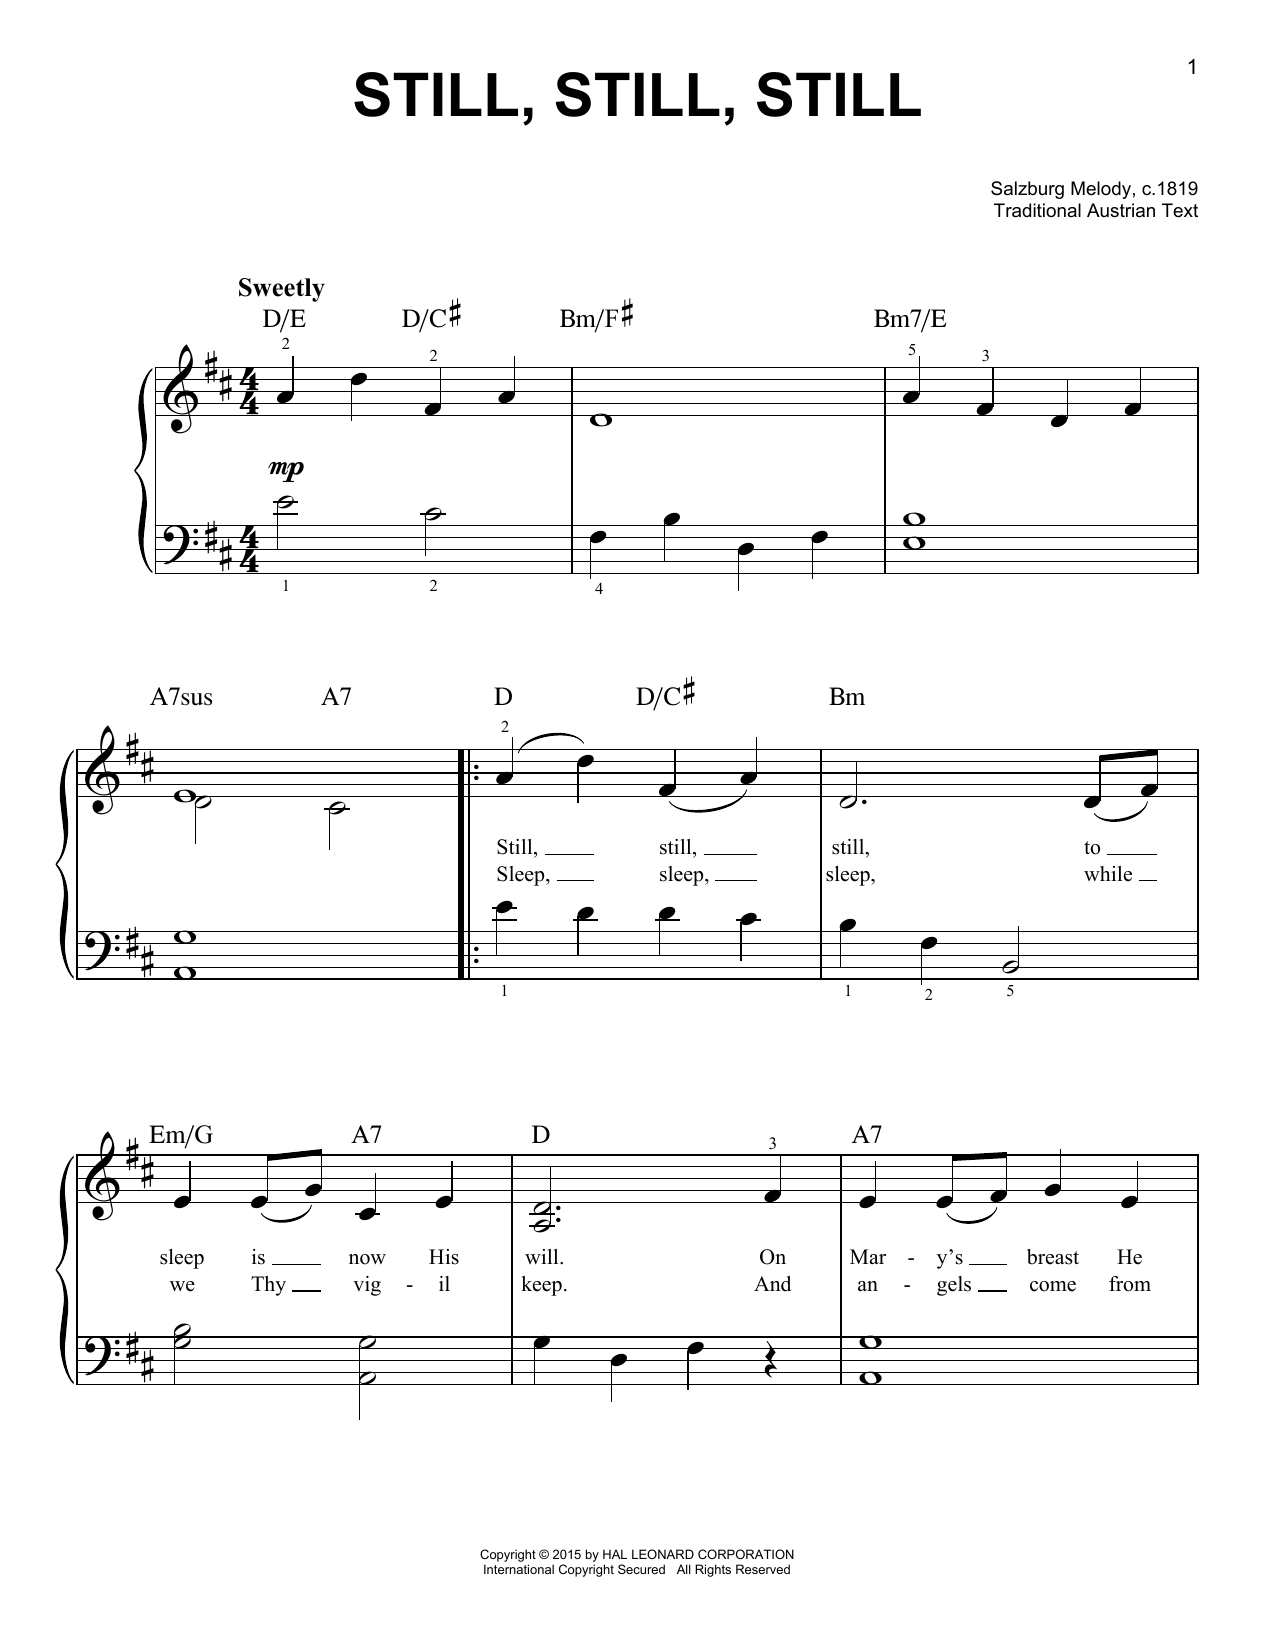 Traditional Still, Still, Still Sheet Music Notes & Chords for Easy Piano - Download or Print PDF